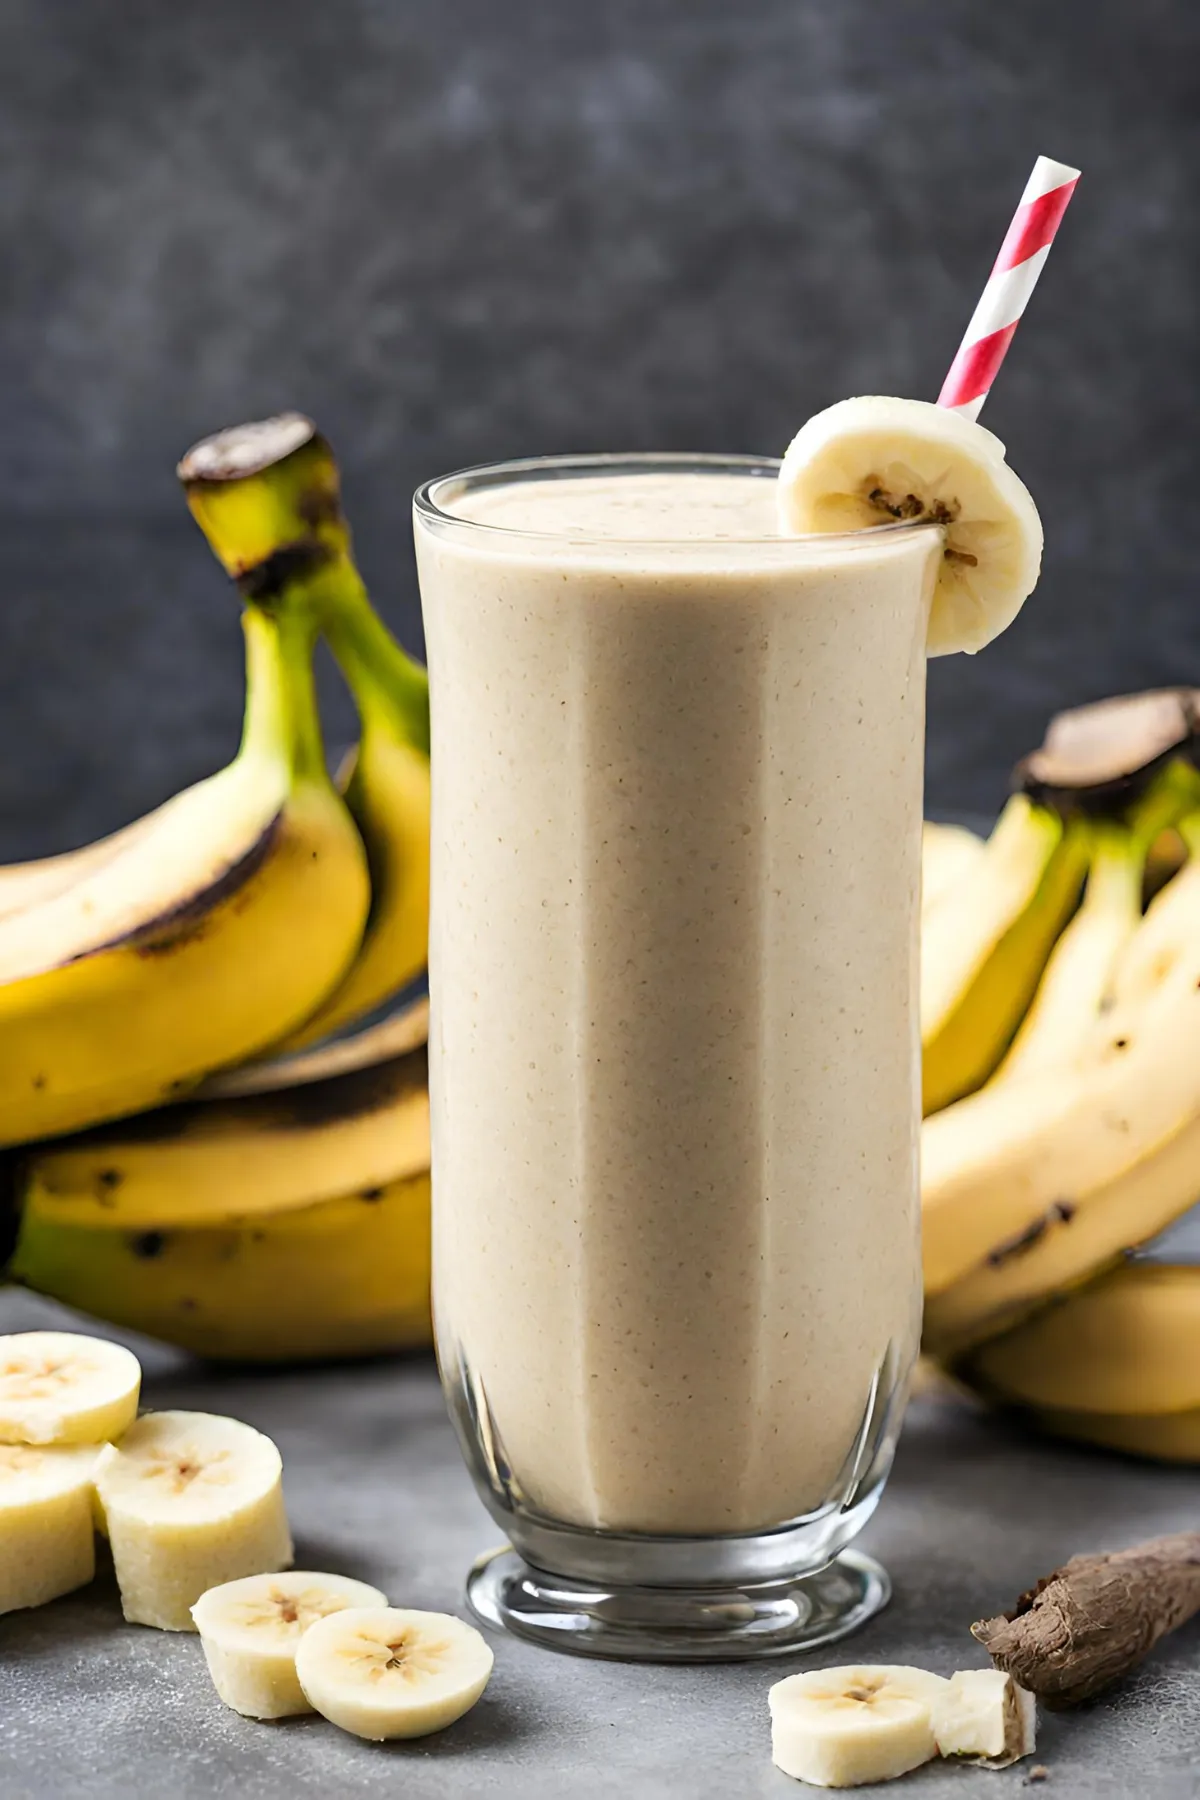 Why Opt for a Yogurt-Free Banana Smoothie